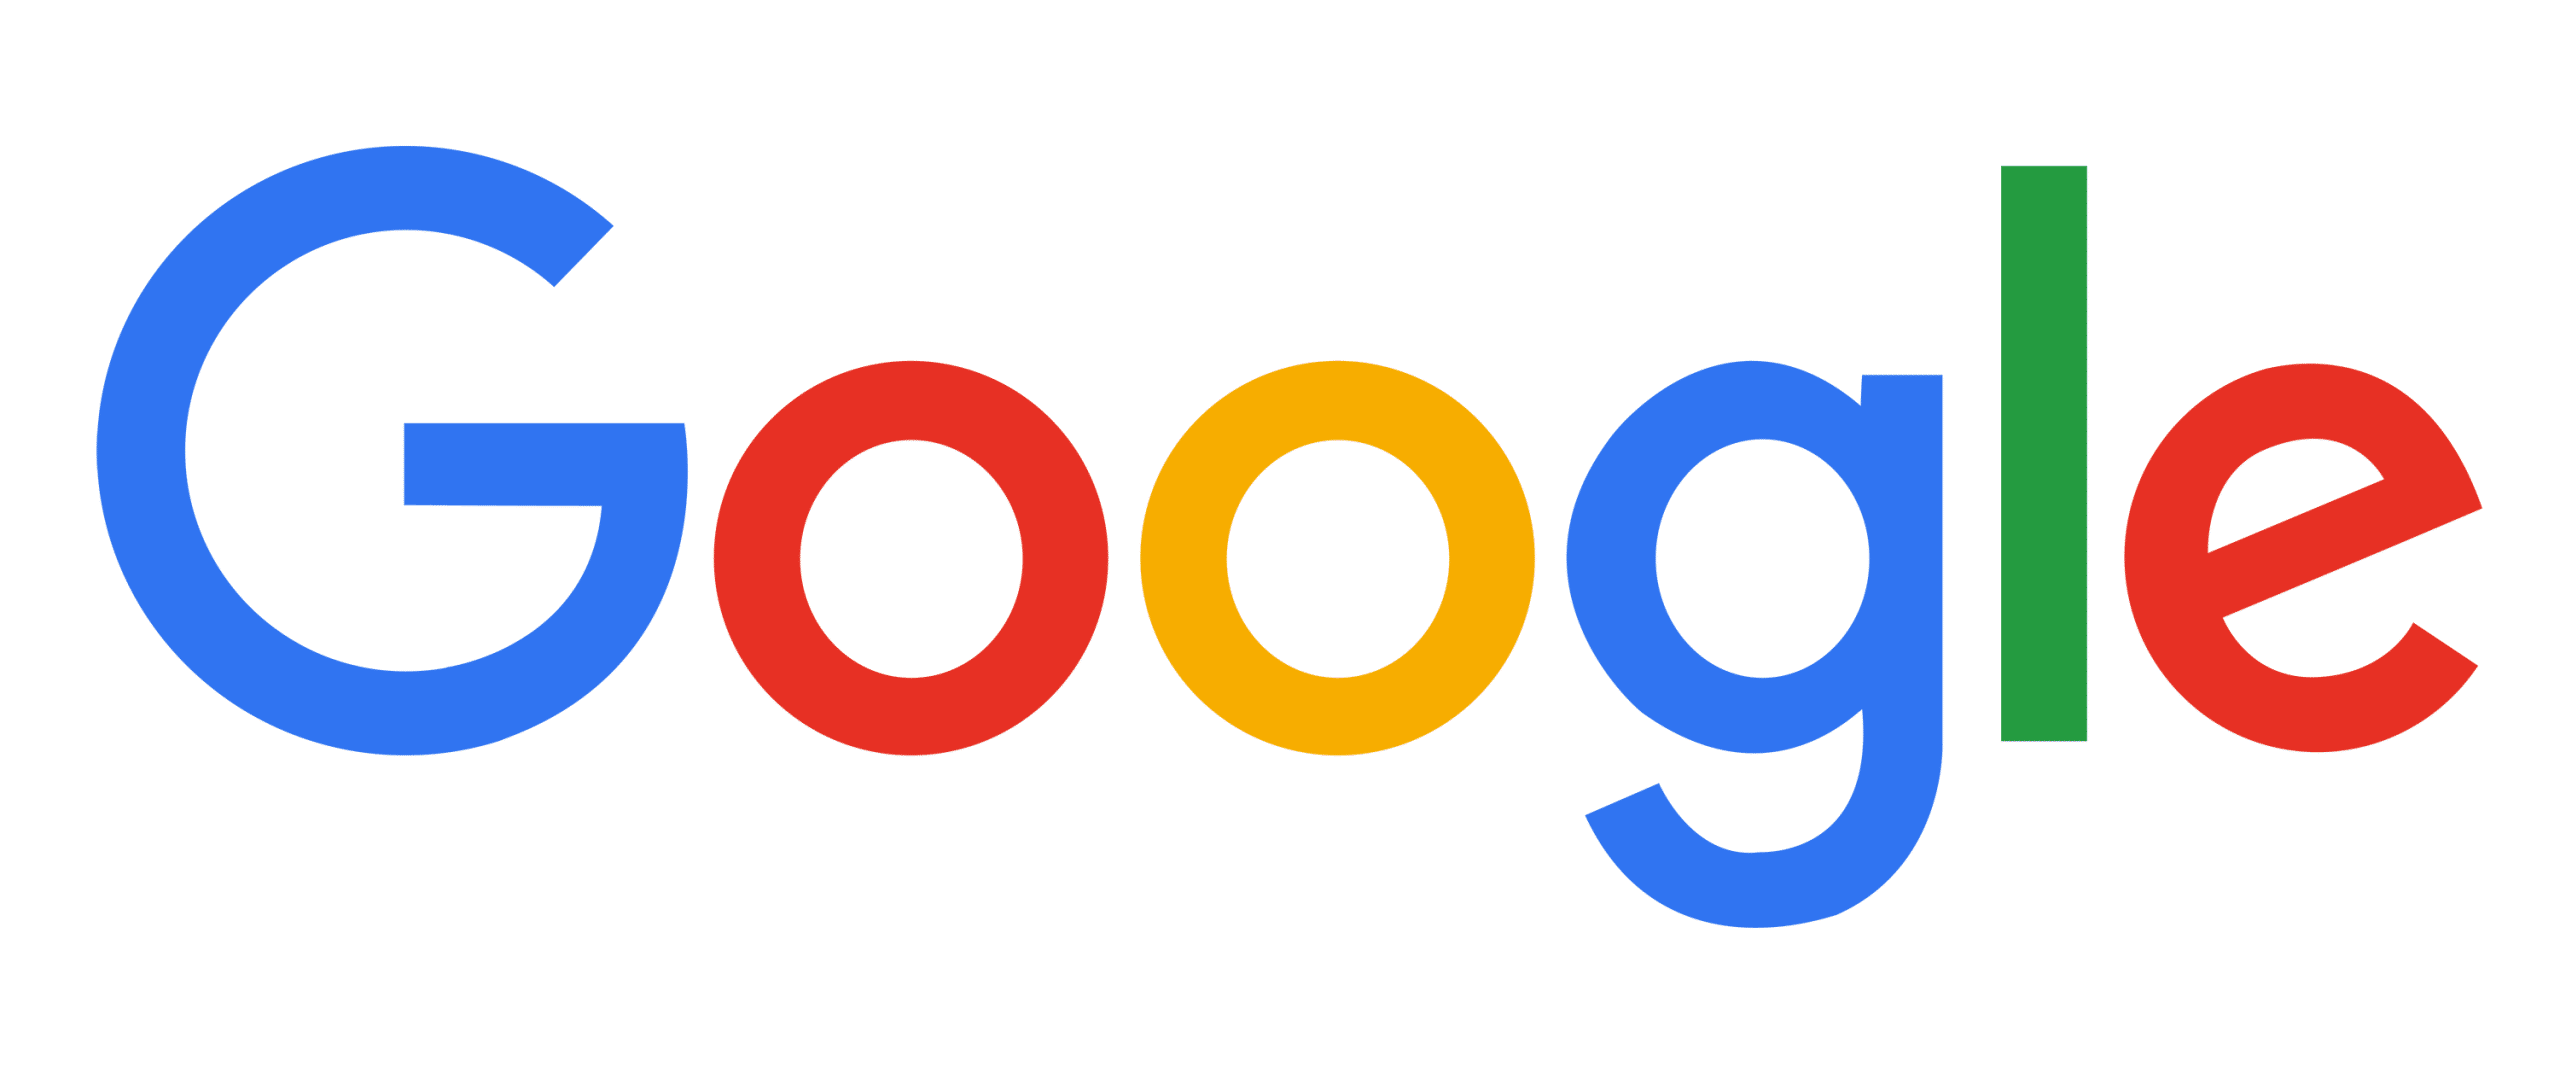 Google SEO Specialist - Search Engine Optimization - SEO Website Developer